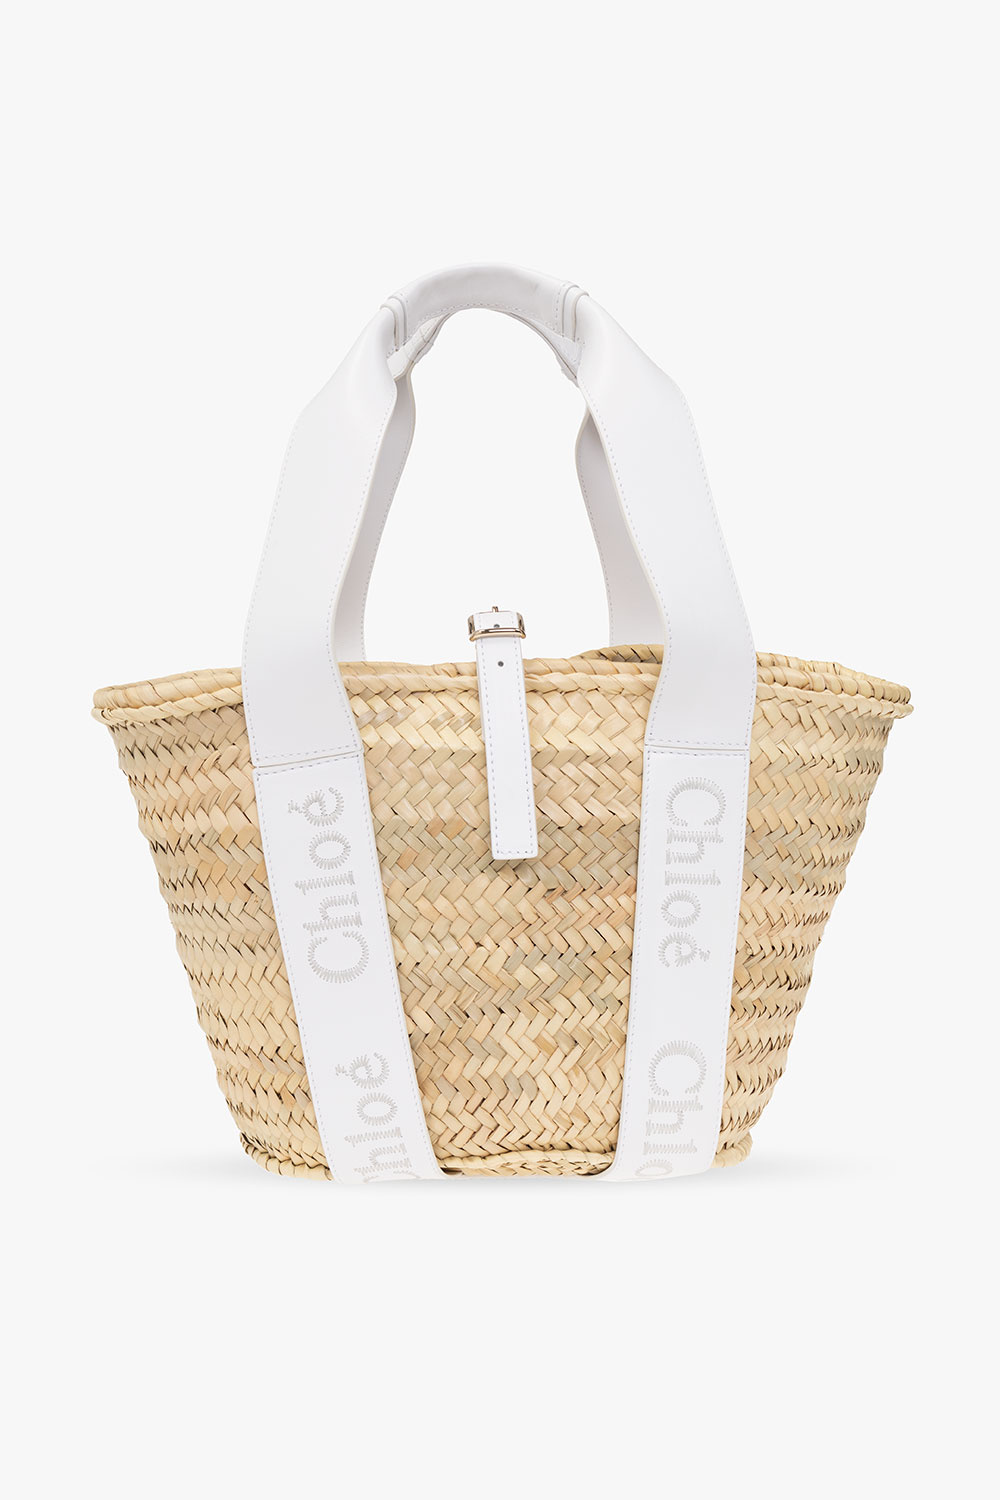 Chloé ‘Chloé Sense Medium’ shopper bag